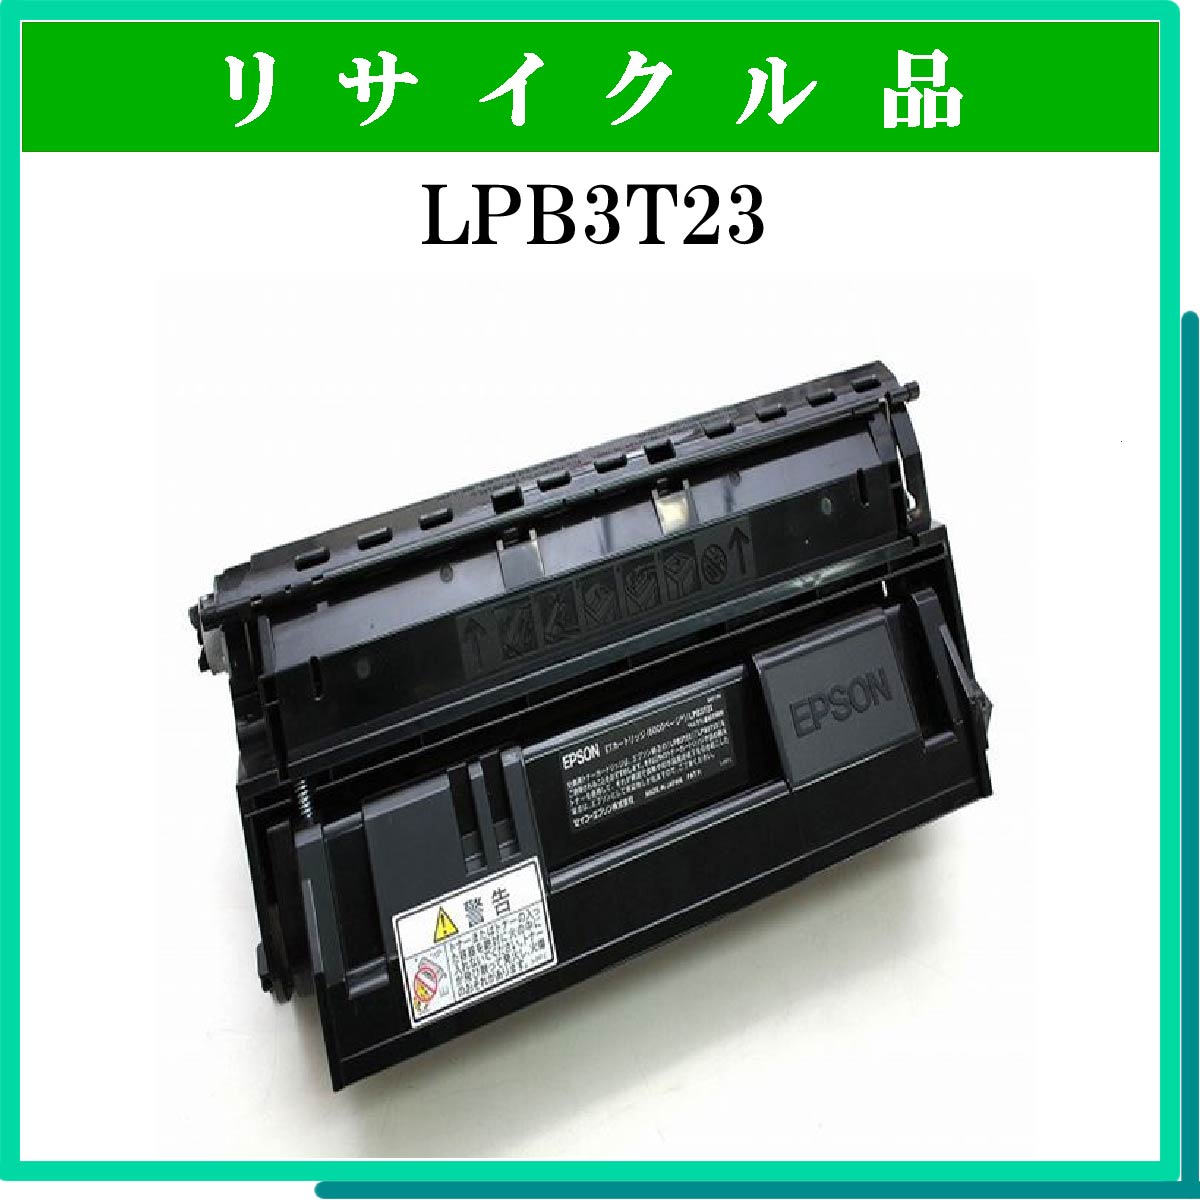 EPSON LPB3T24V [LP-S2200/S3200用 環境推進トナー] - プリンター・FAX